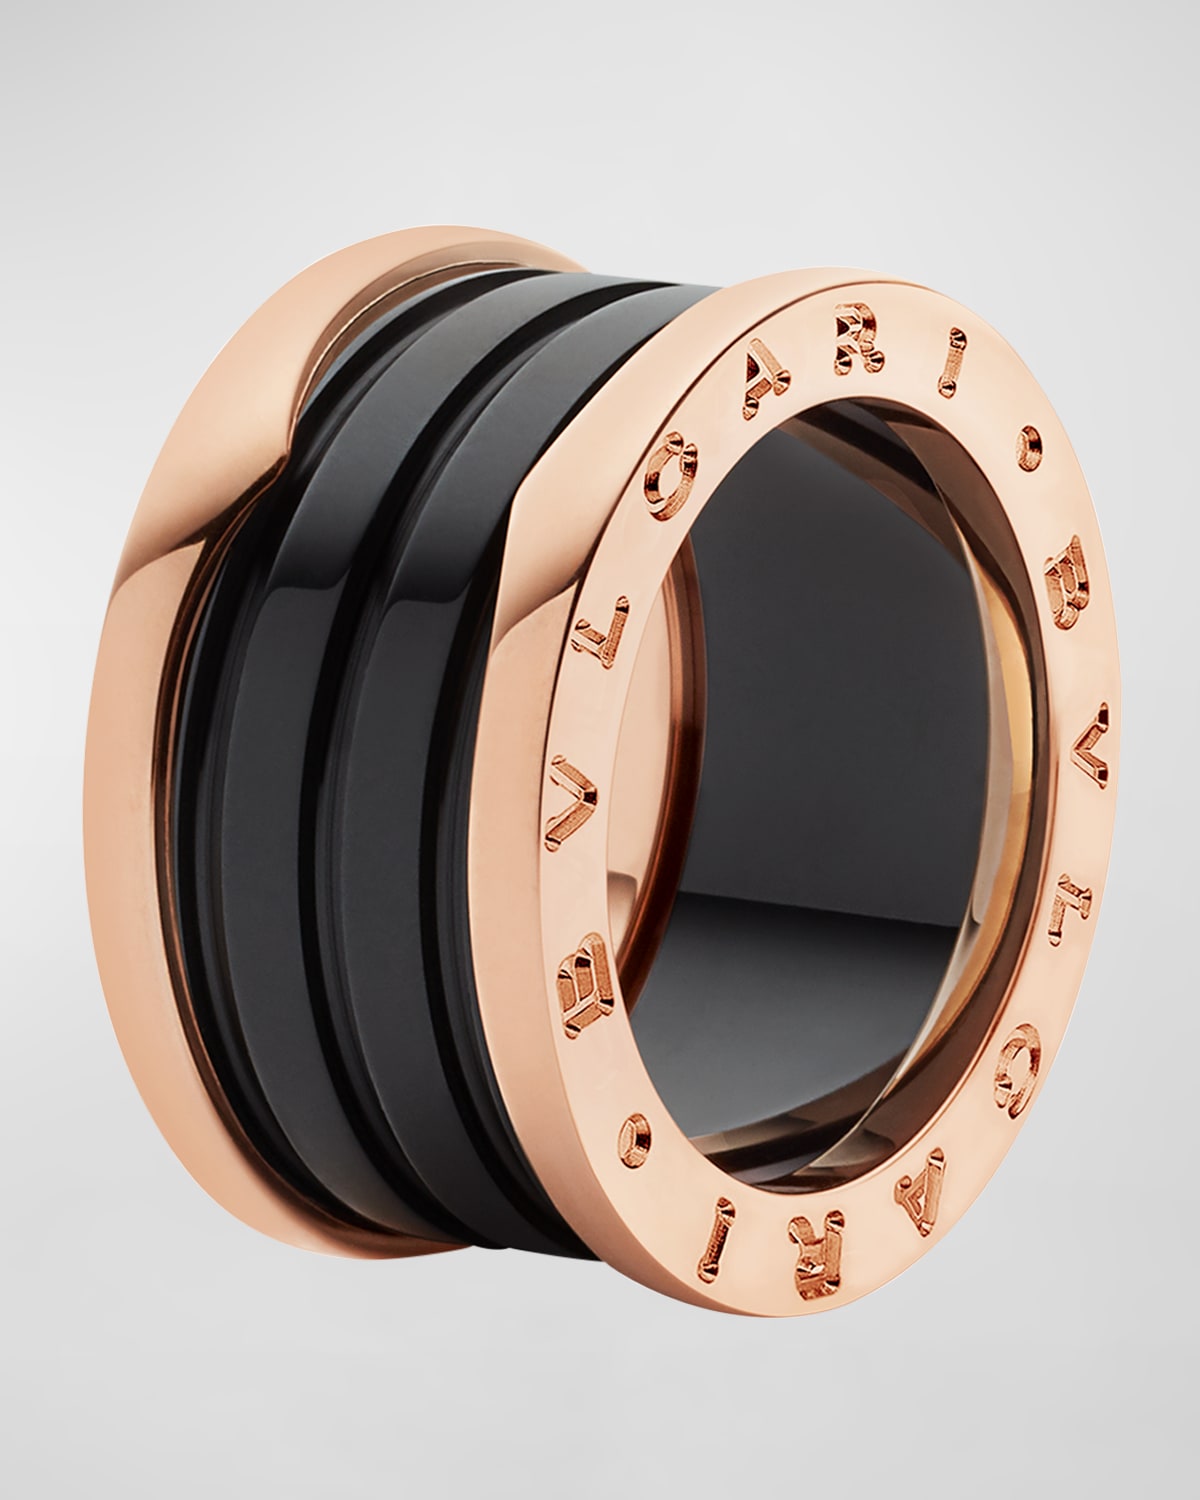 BVLGARI B.Zero1 Pink Gold Black Ceramic Ring